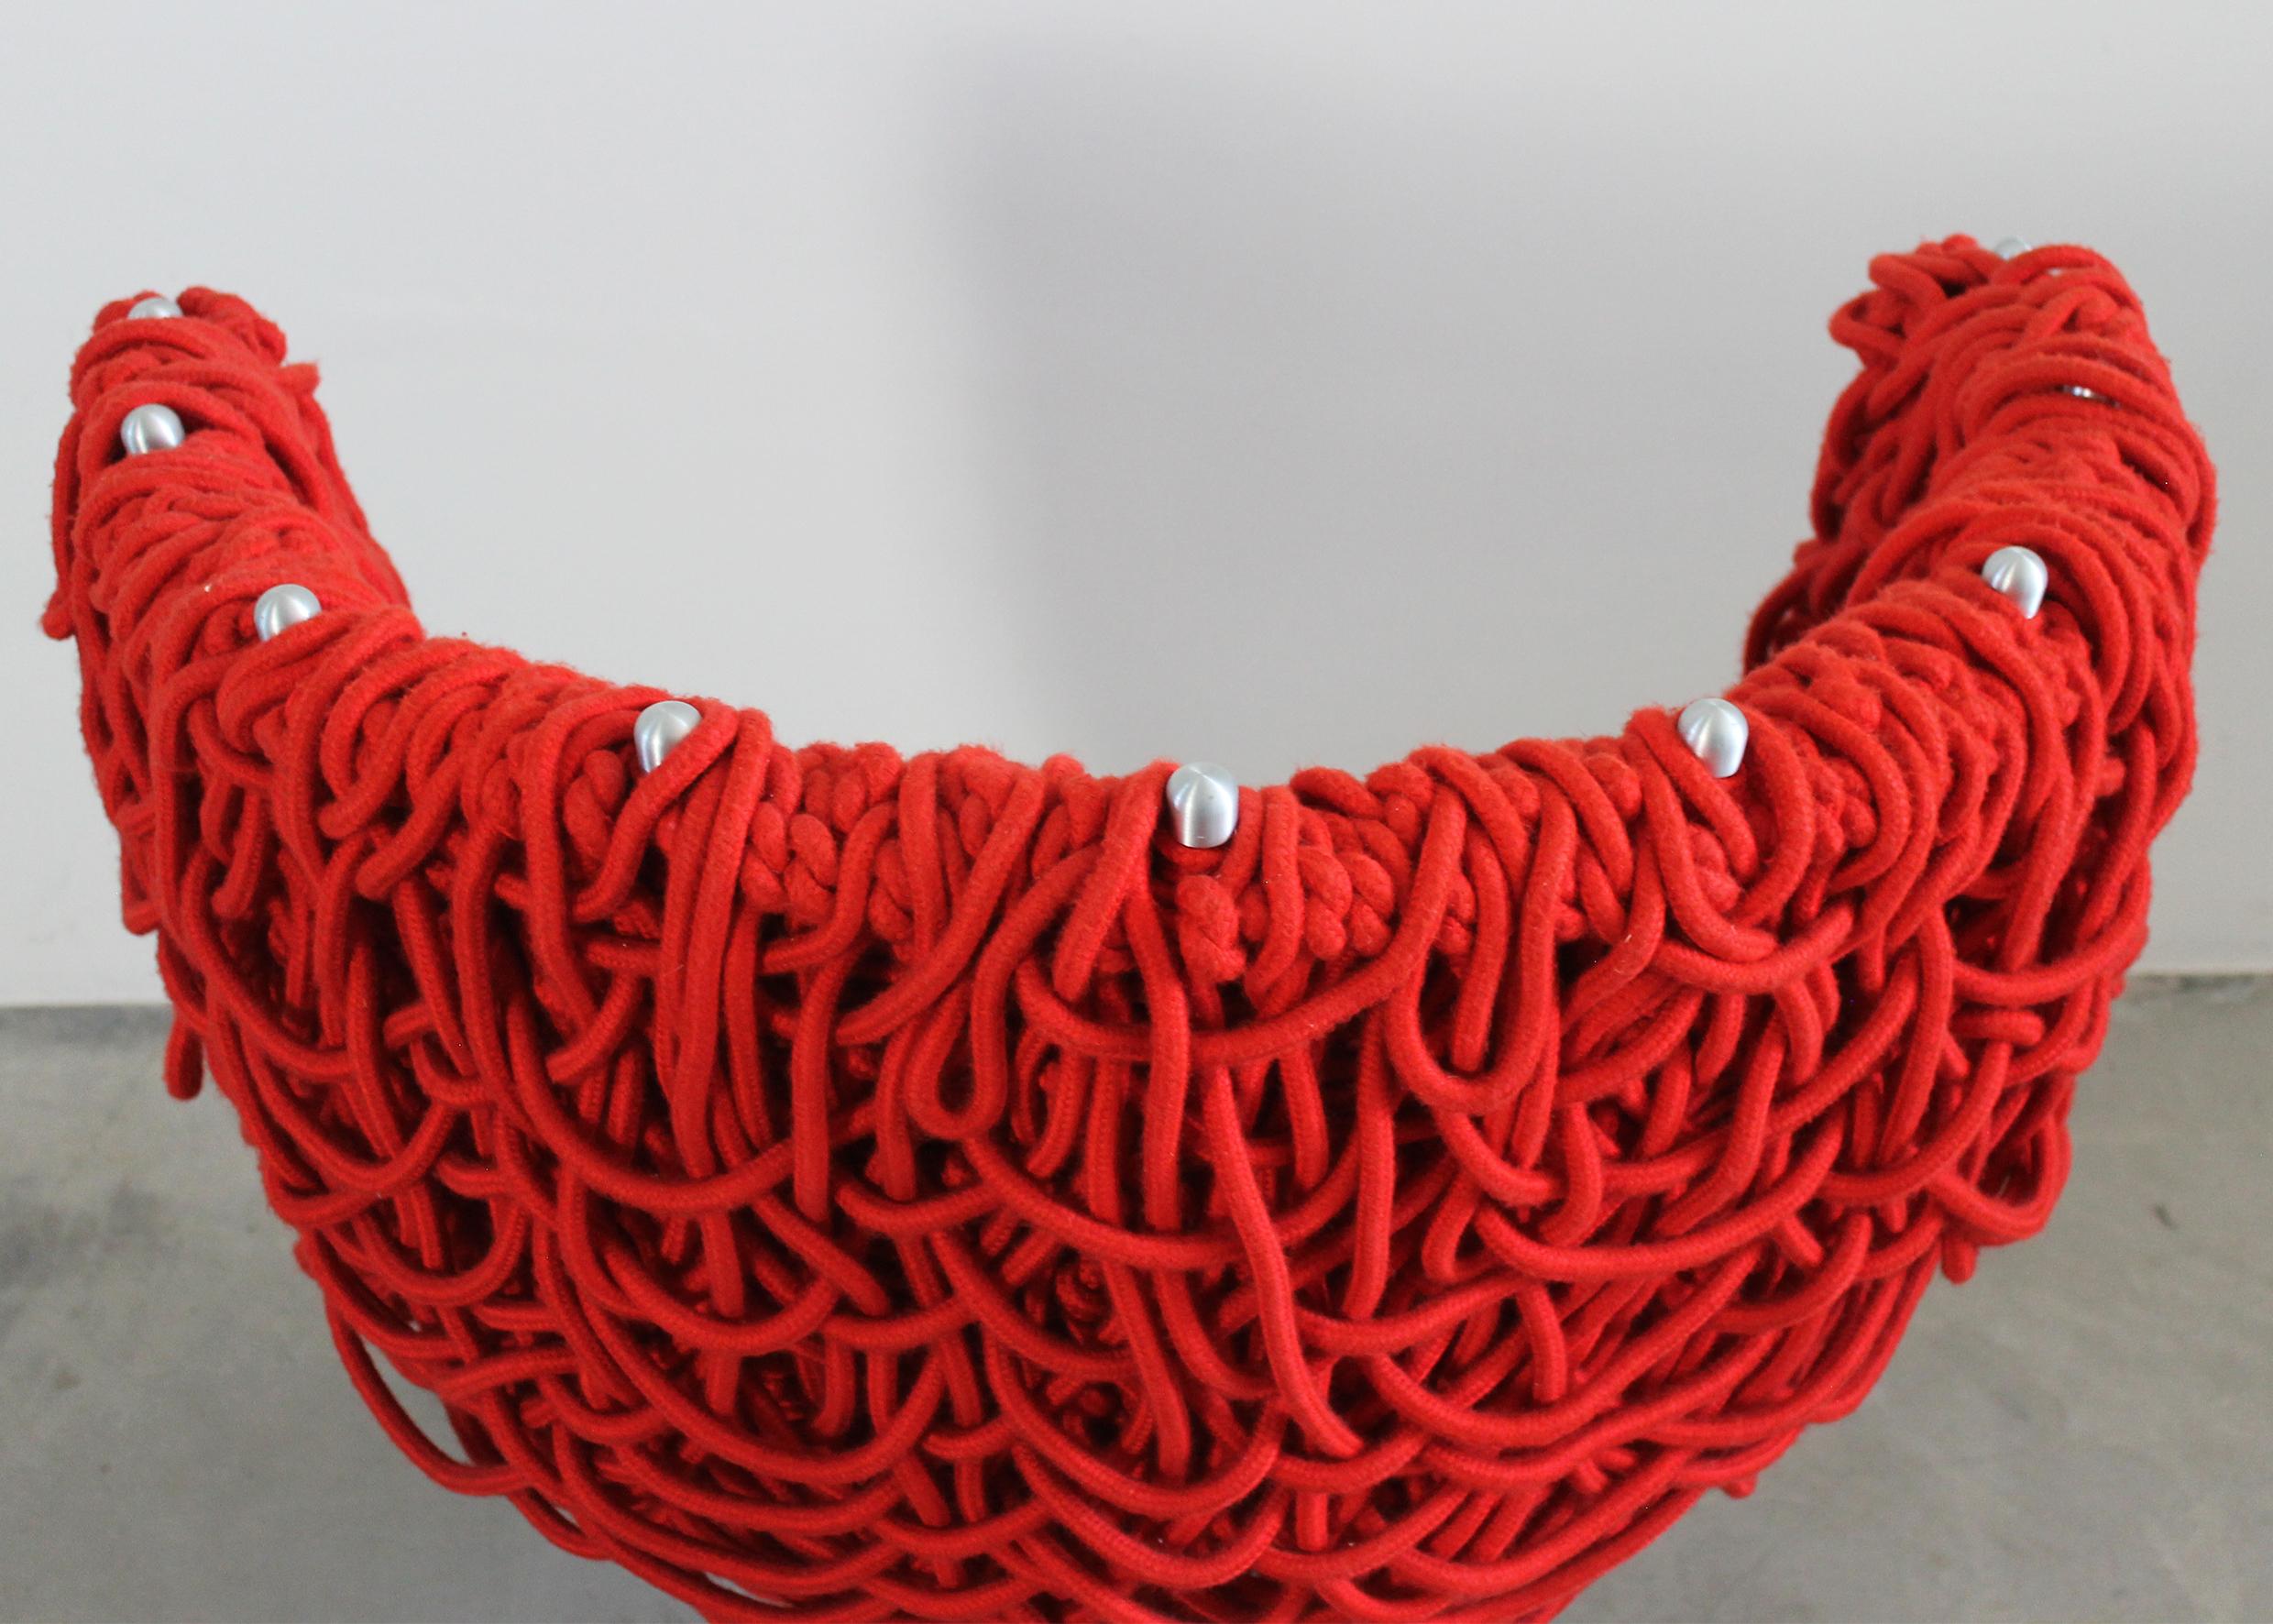 Contemporary Fernando & Humberto Campana Vermelha Armchair in Red Rope and Steel by Edra 2000